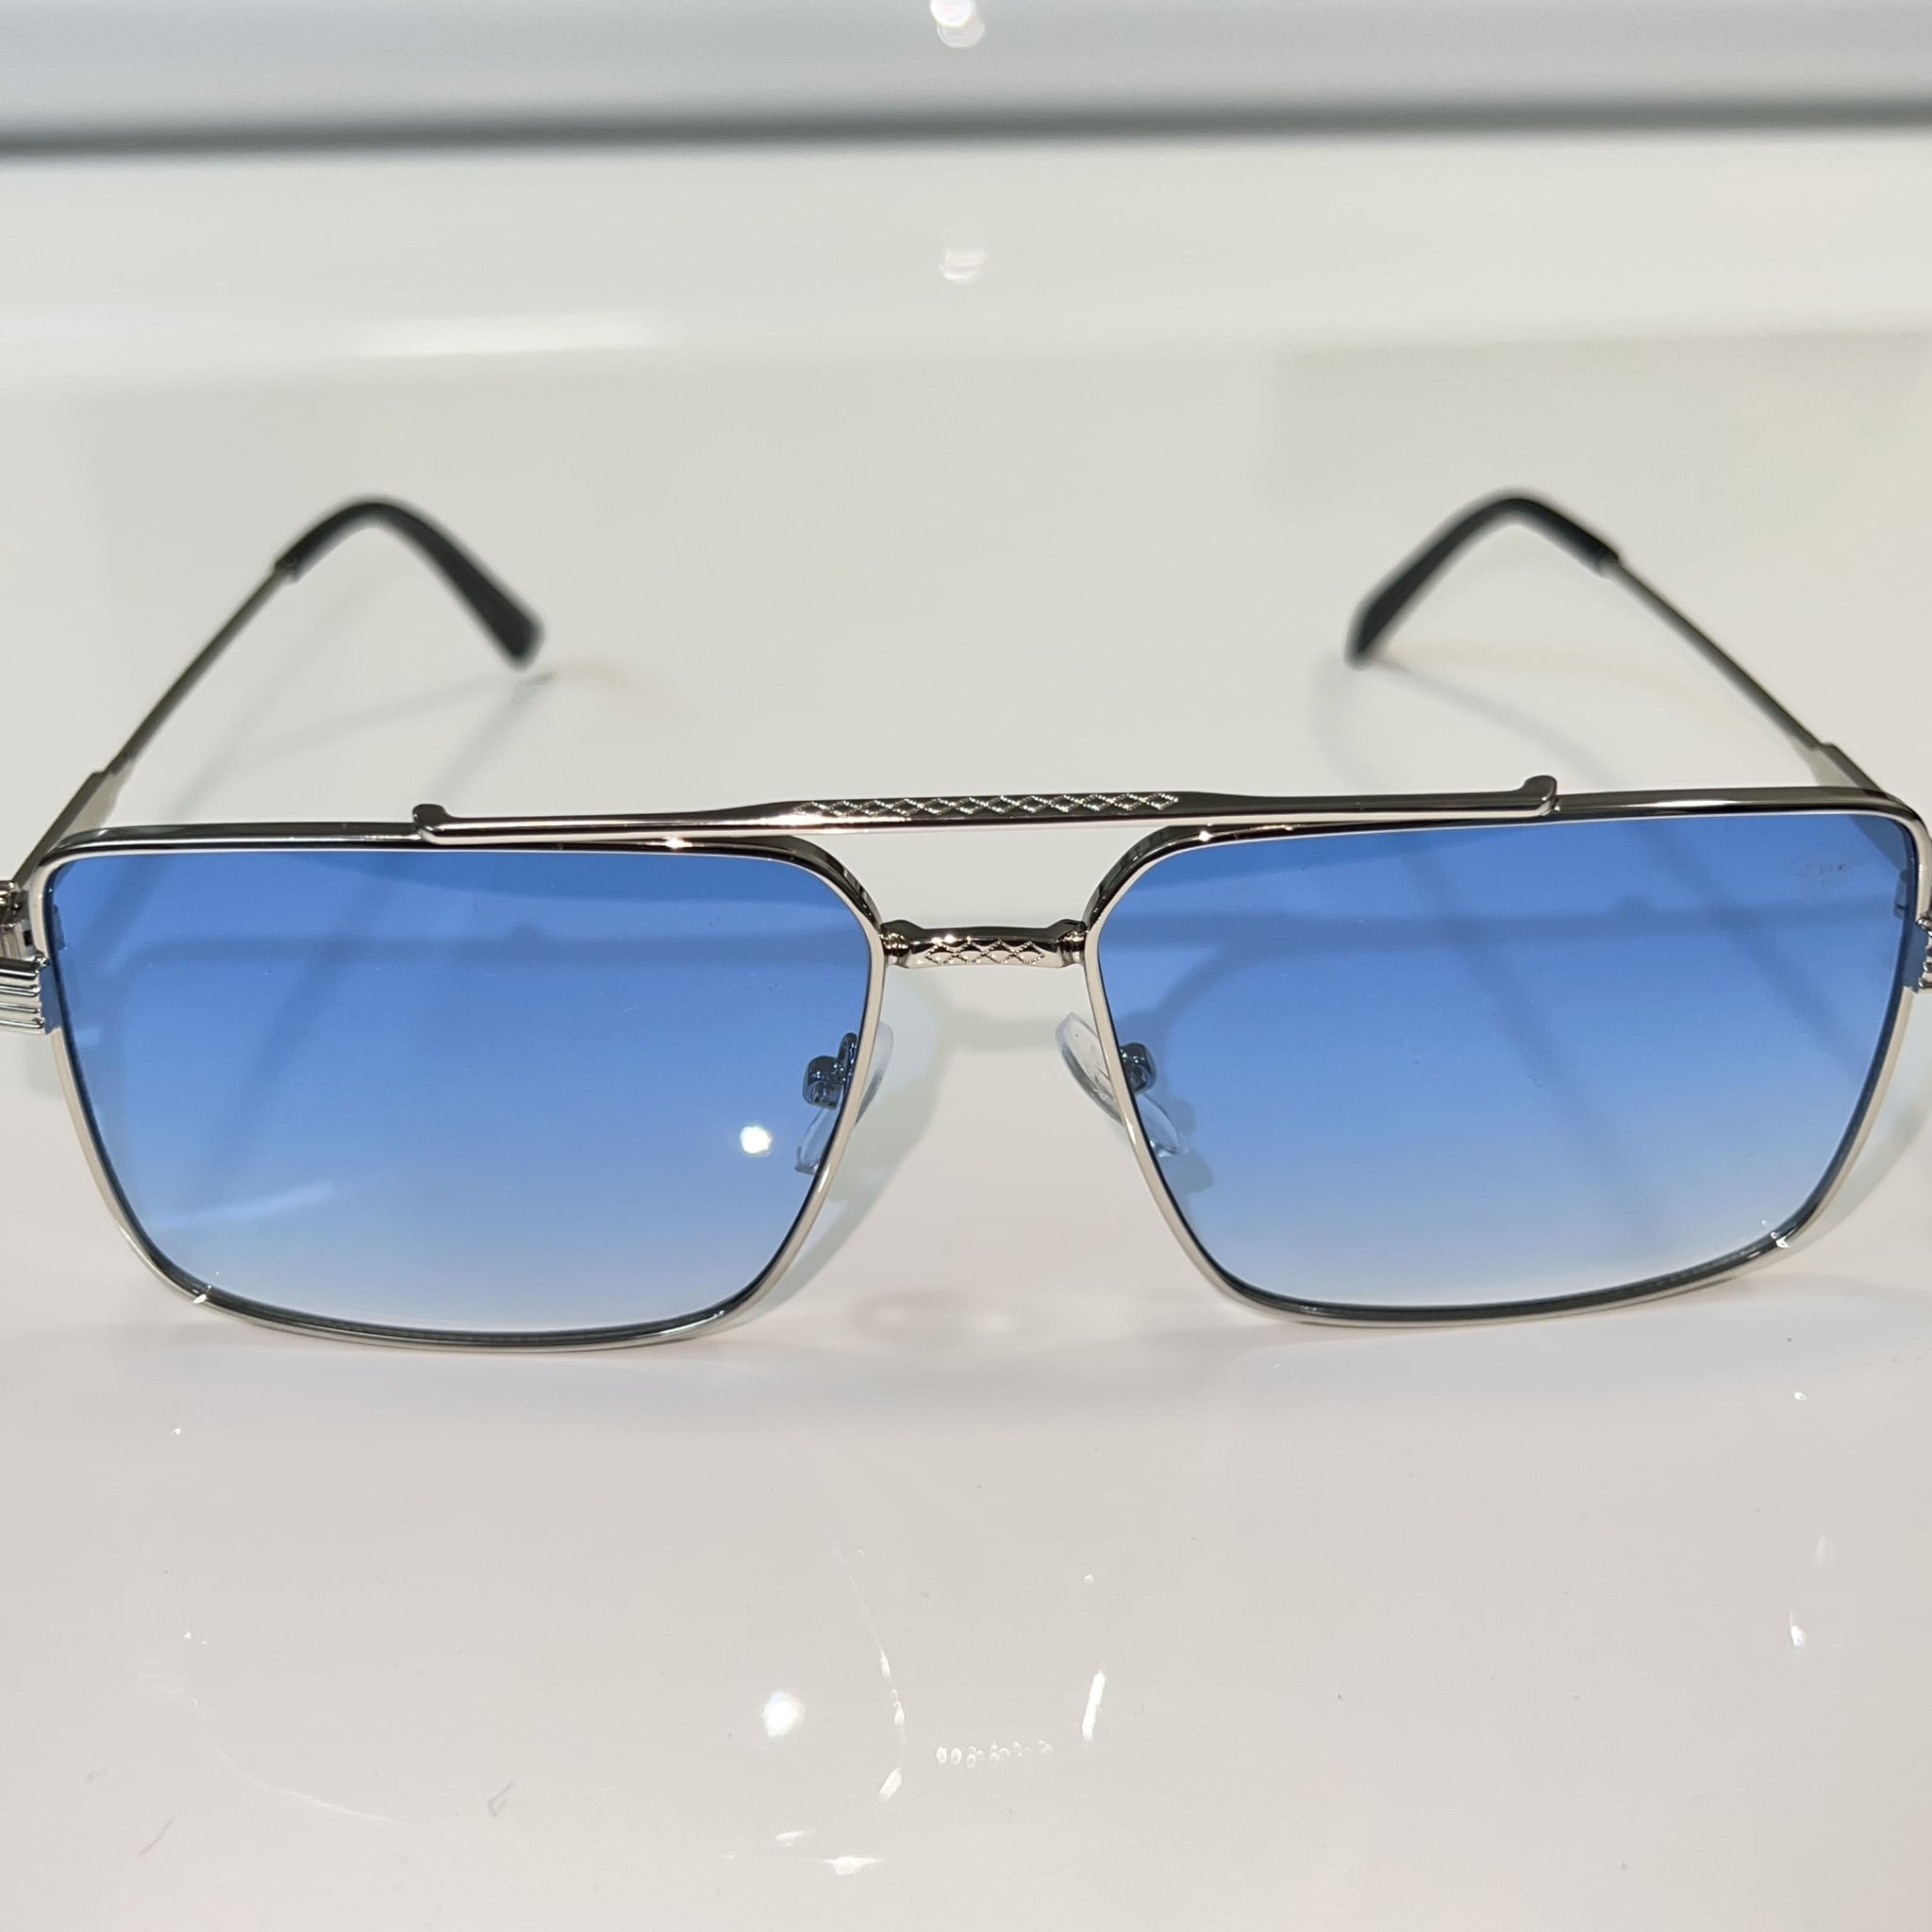 Billionaire Glasses - 14k gold plated - Blue Shade / Silver Frame - Sehgal Glasses